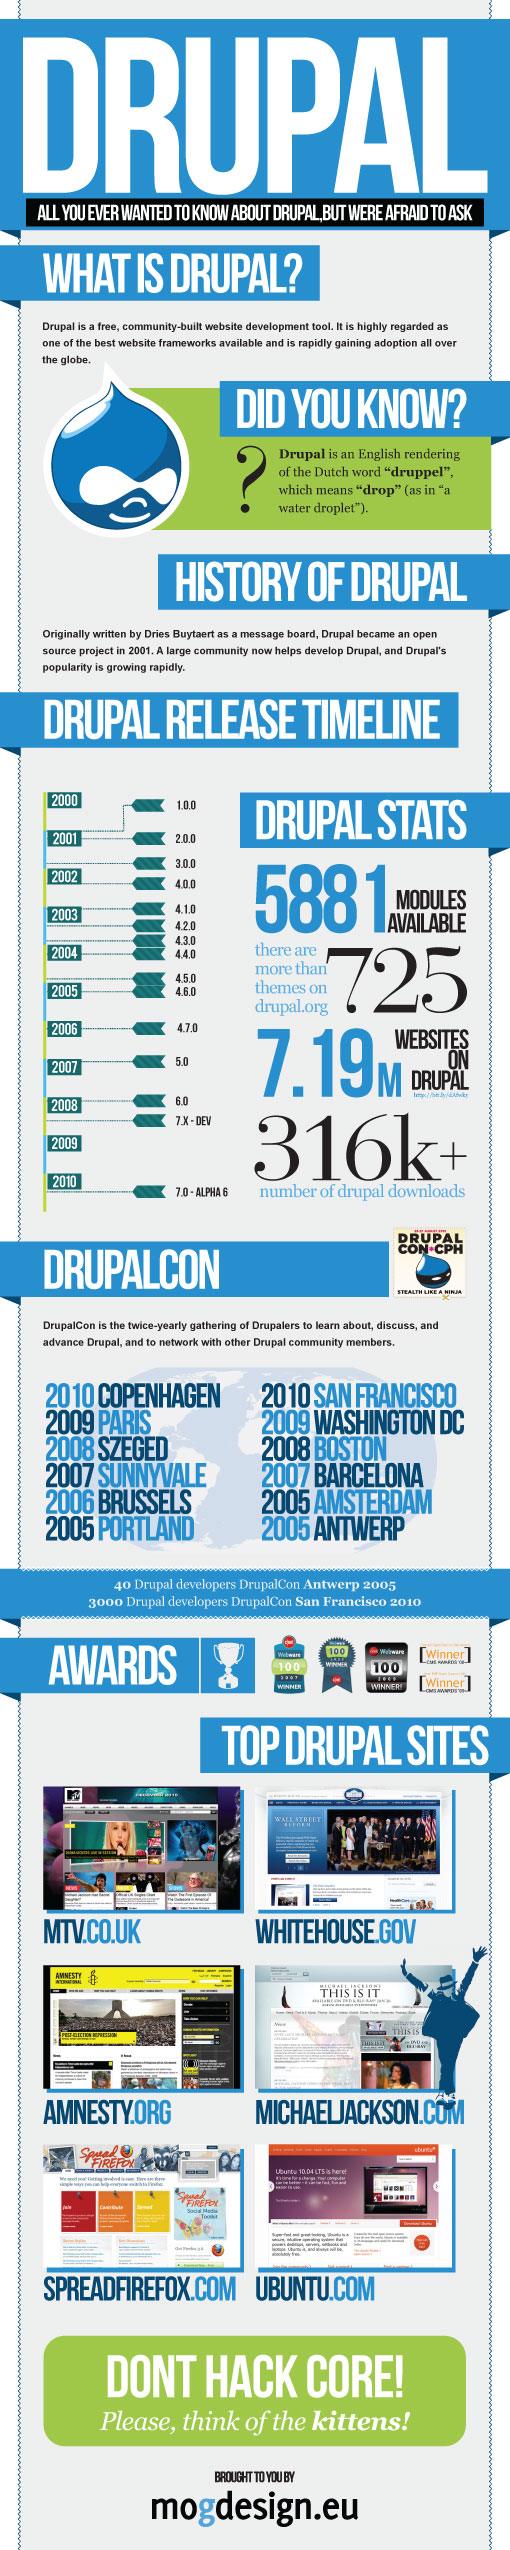 Drupal Infographic